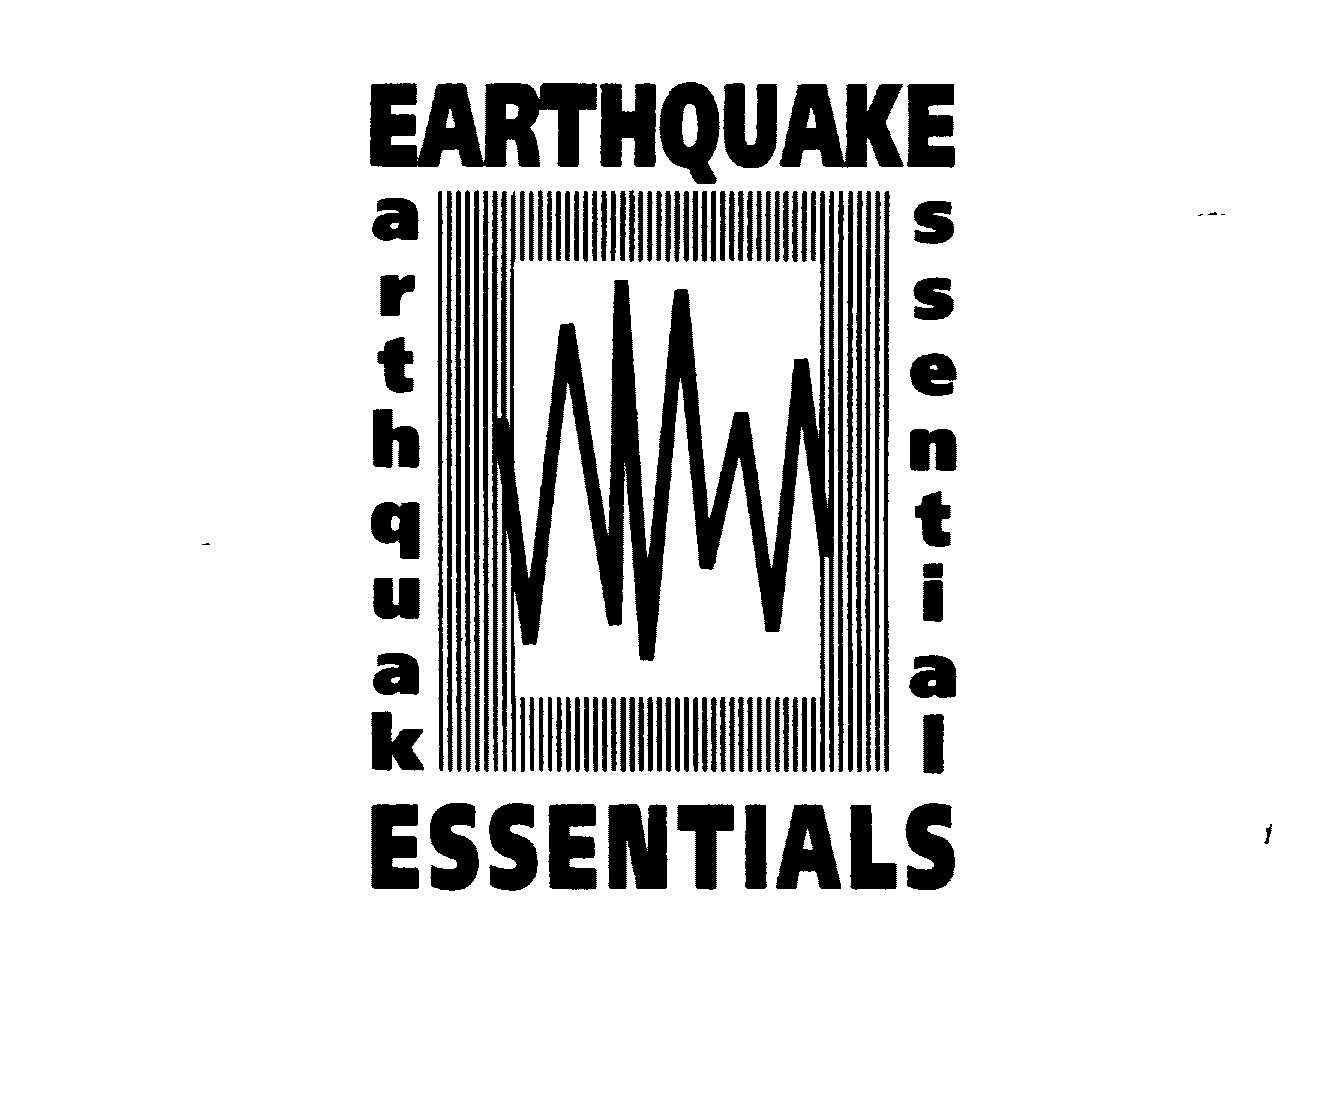  EARTHQUAKE ESSENTIALS